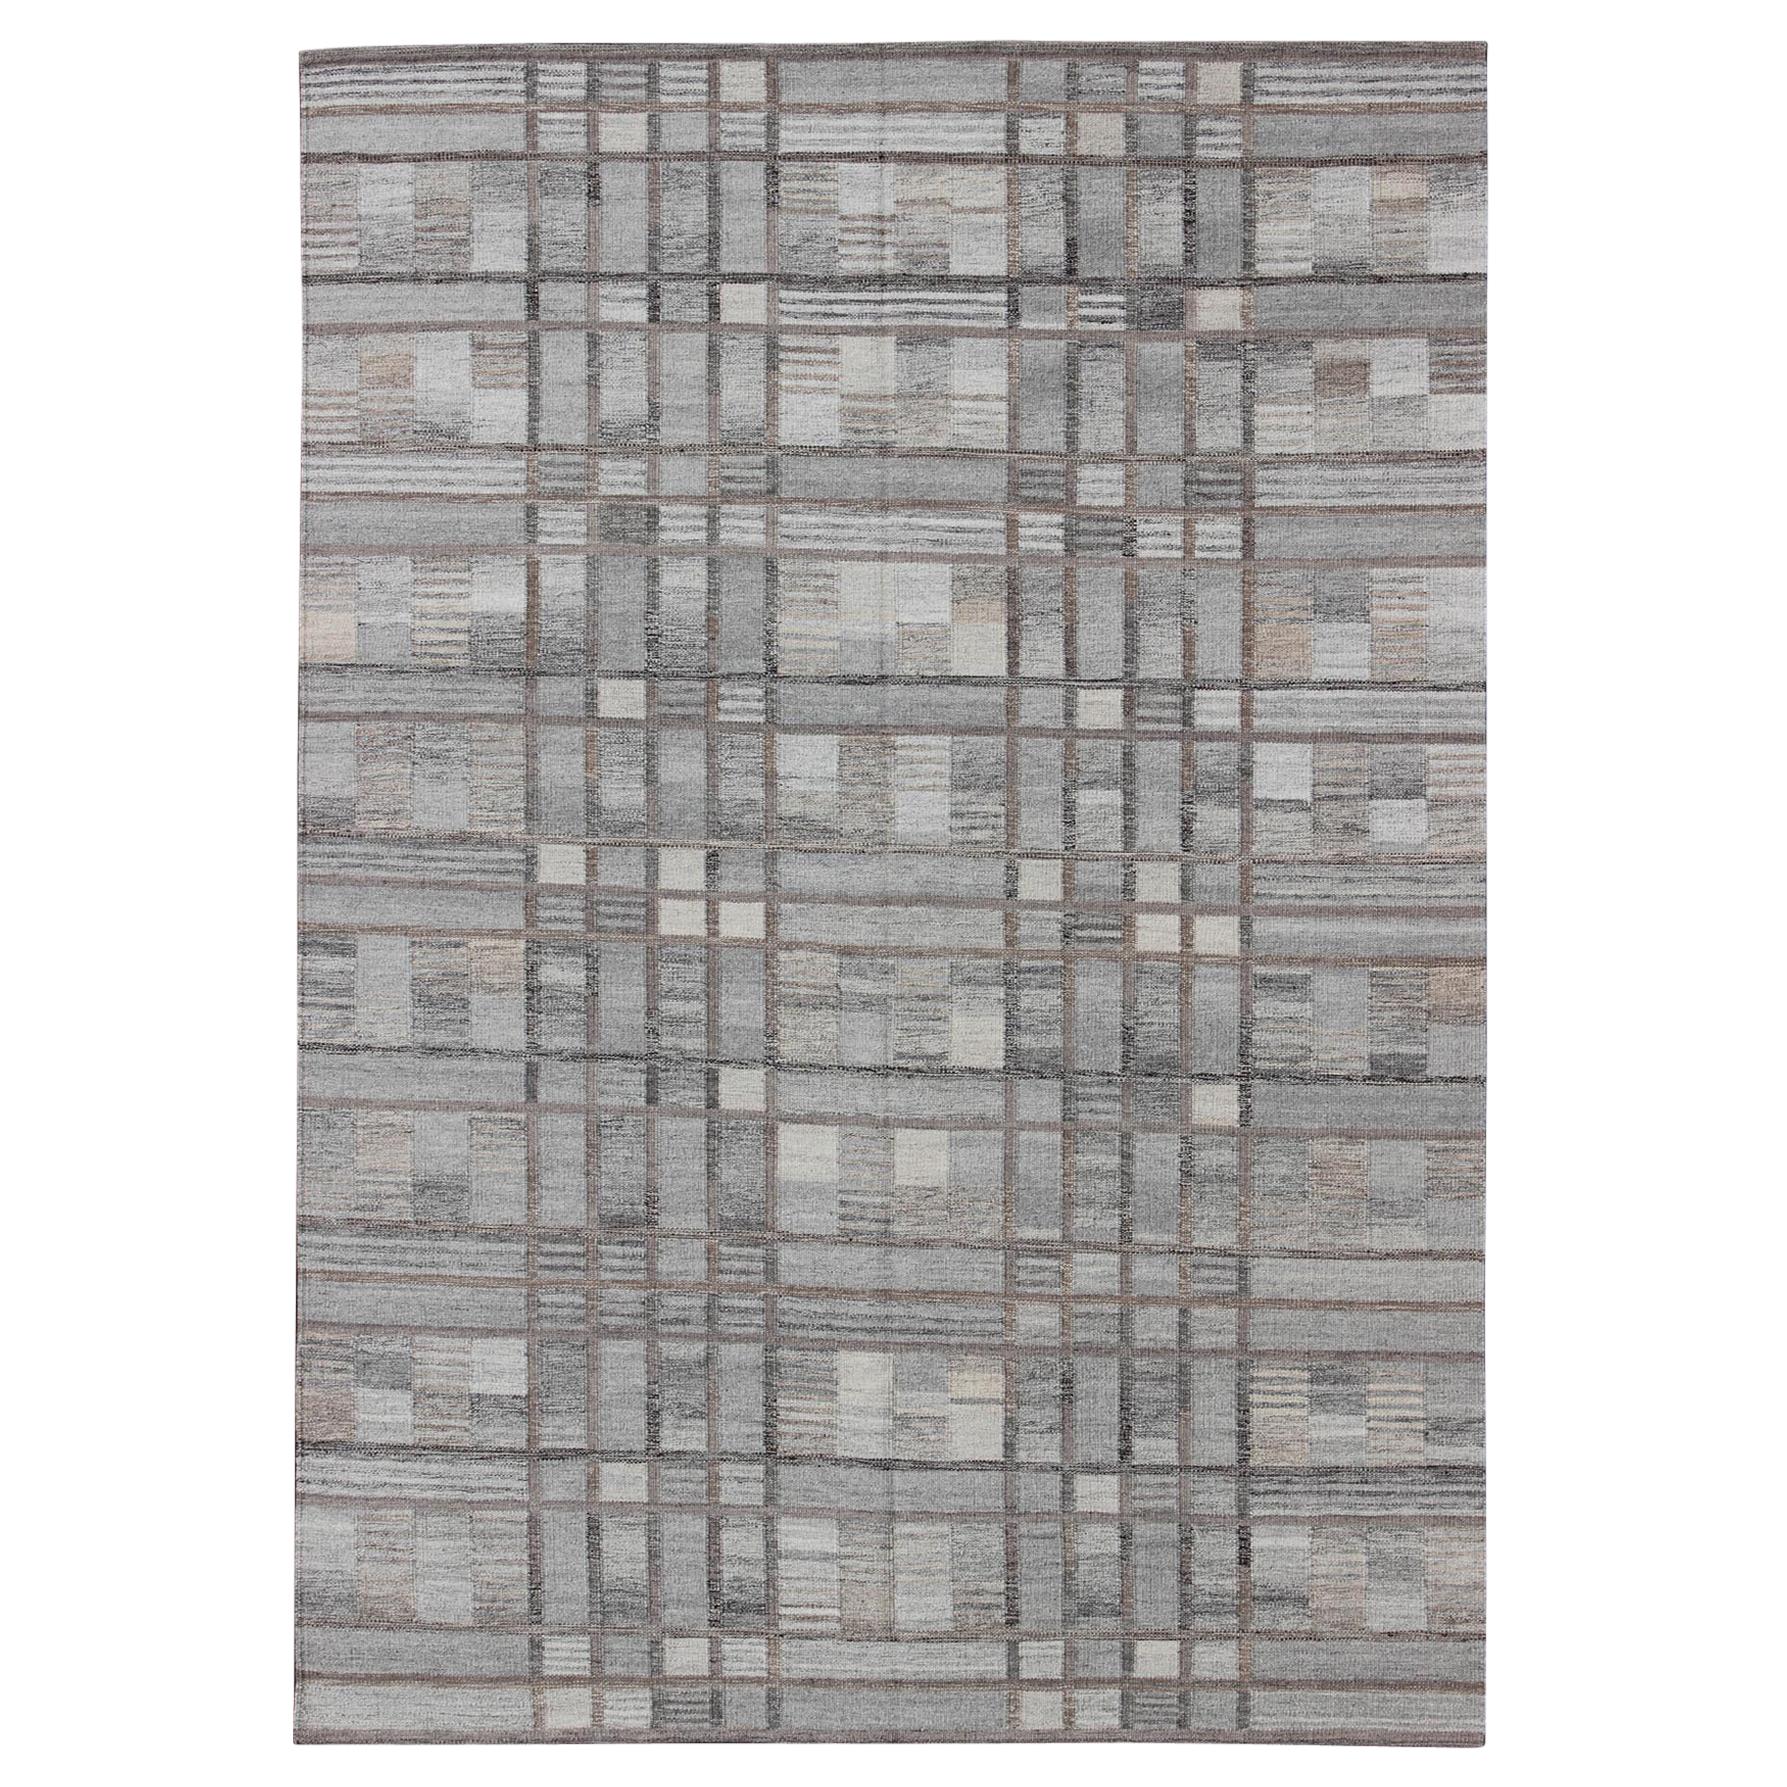 Geometric Stripe Block Modern Scandinavian Flat-Weave Design Rug in Gray Tones For Sale